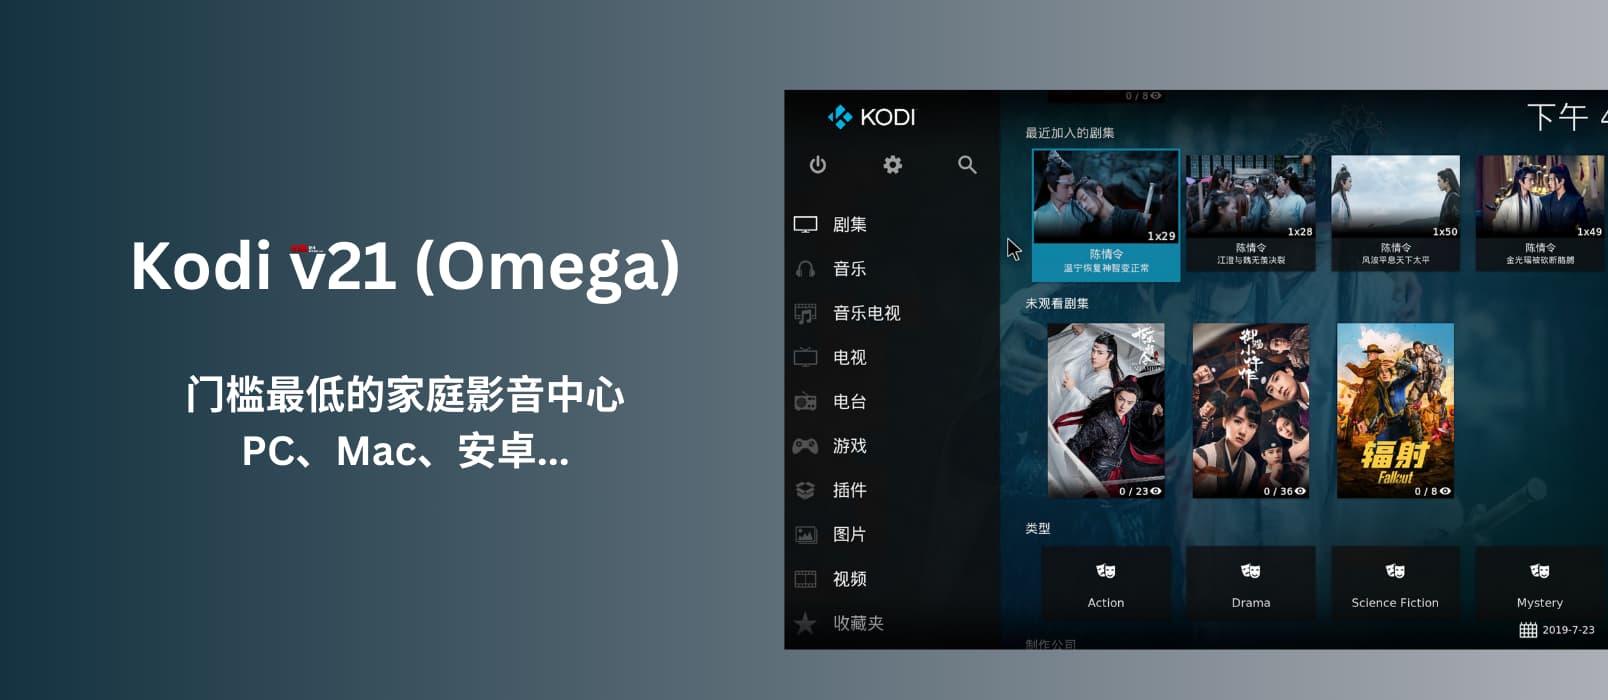 Kodi v21 (Omega)发布，可能是门槛最低的家庭影音中心：集中一处播放本地视频、海报墙、自动刮削、字幕